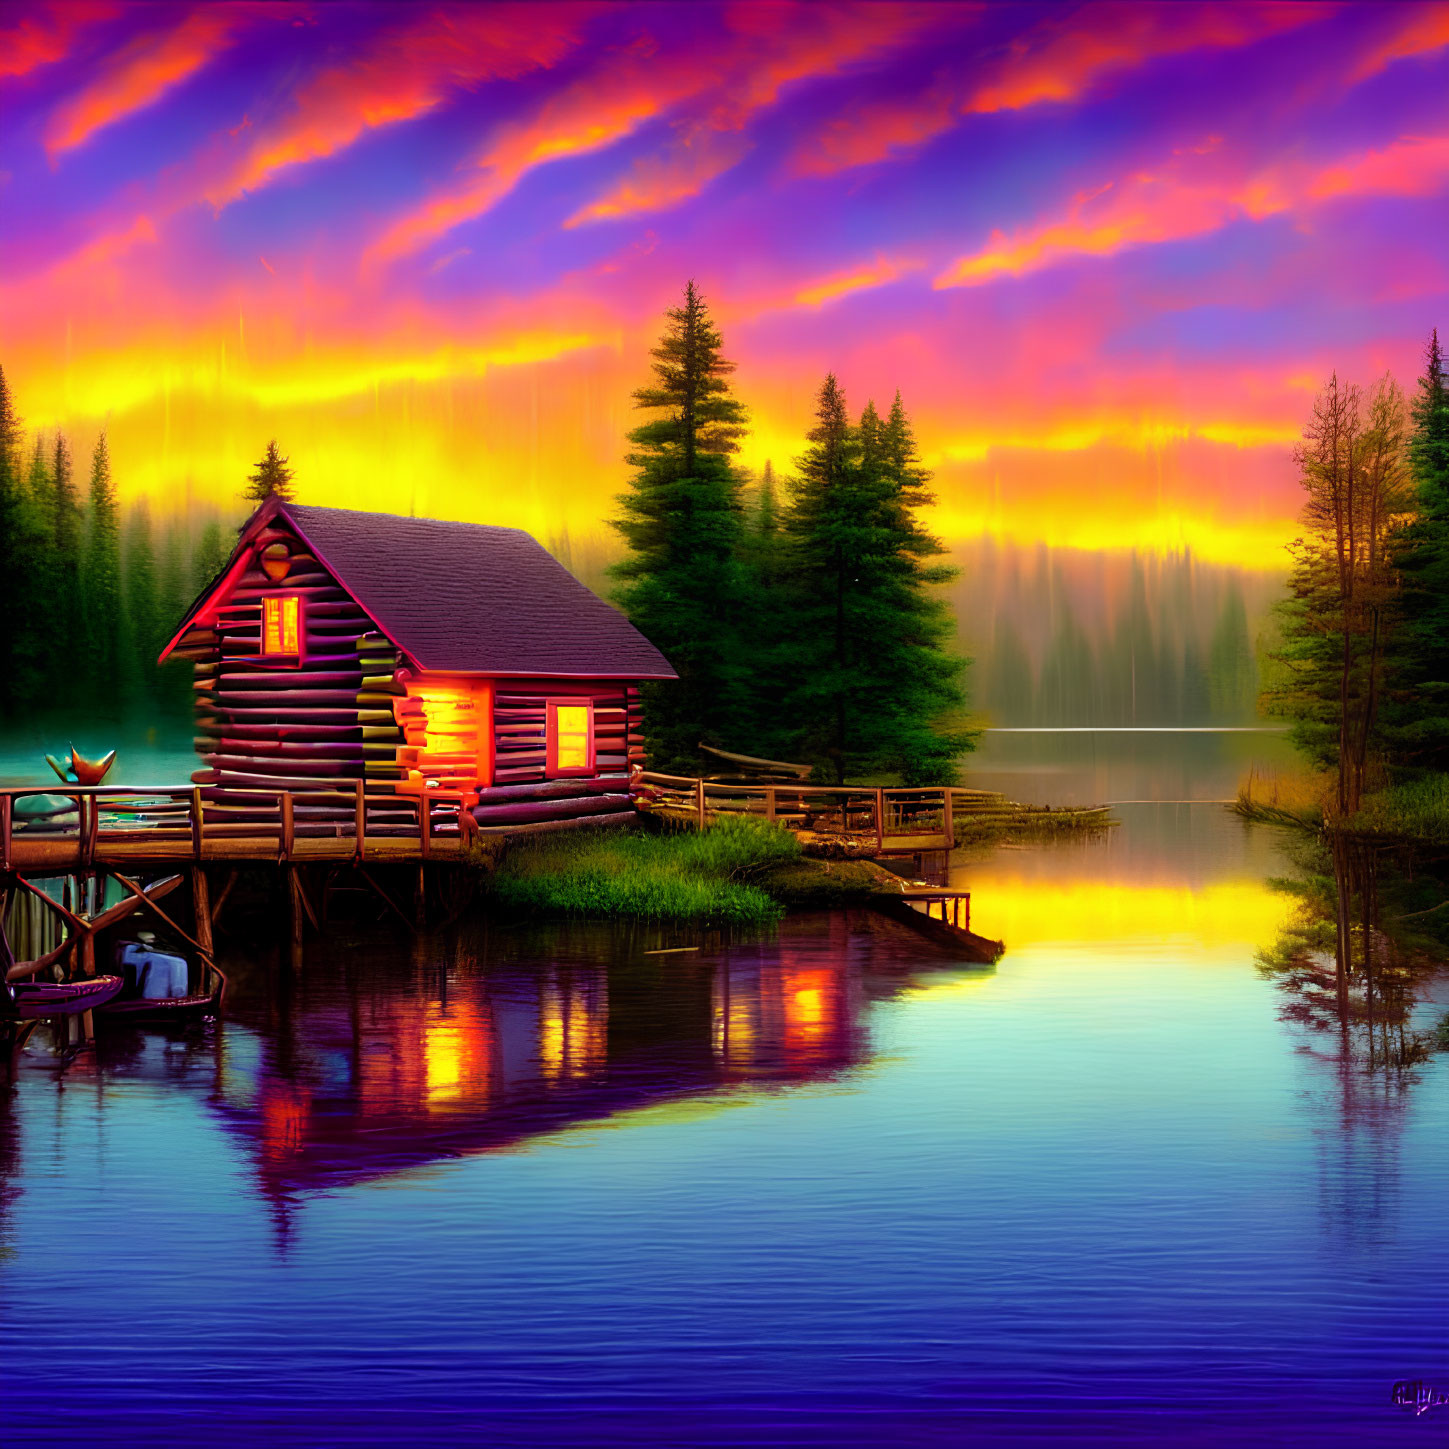 Digital Art: Log Cabin on Lakeside at Sunset